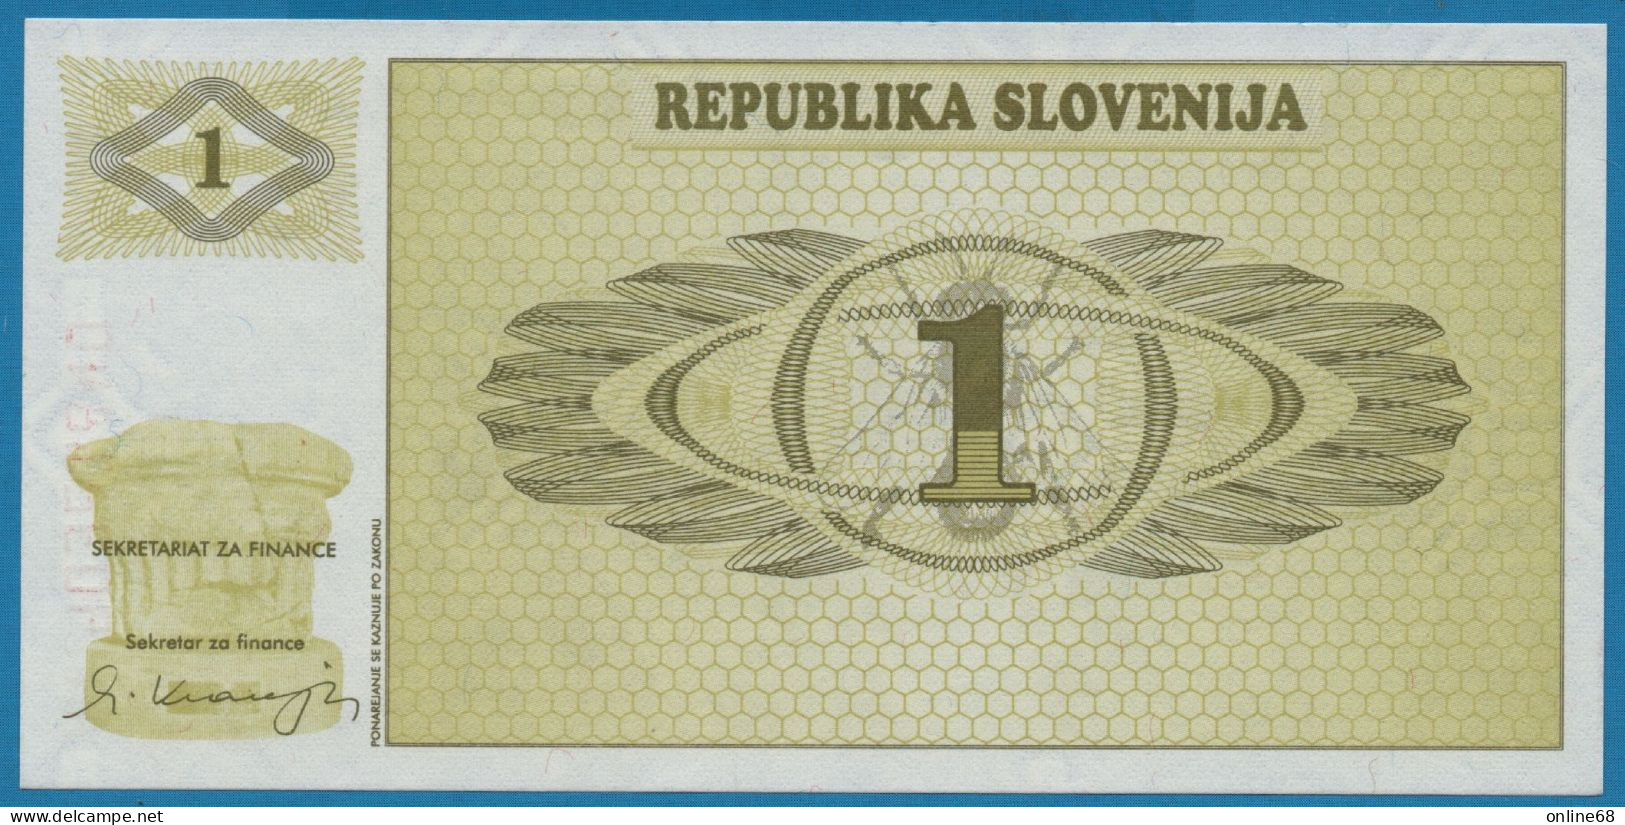 SLOVENIA 1 TOLAR 1990 # 90321840 P# 1 - Slowenien